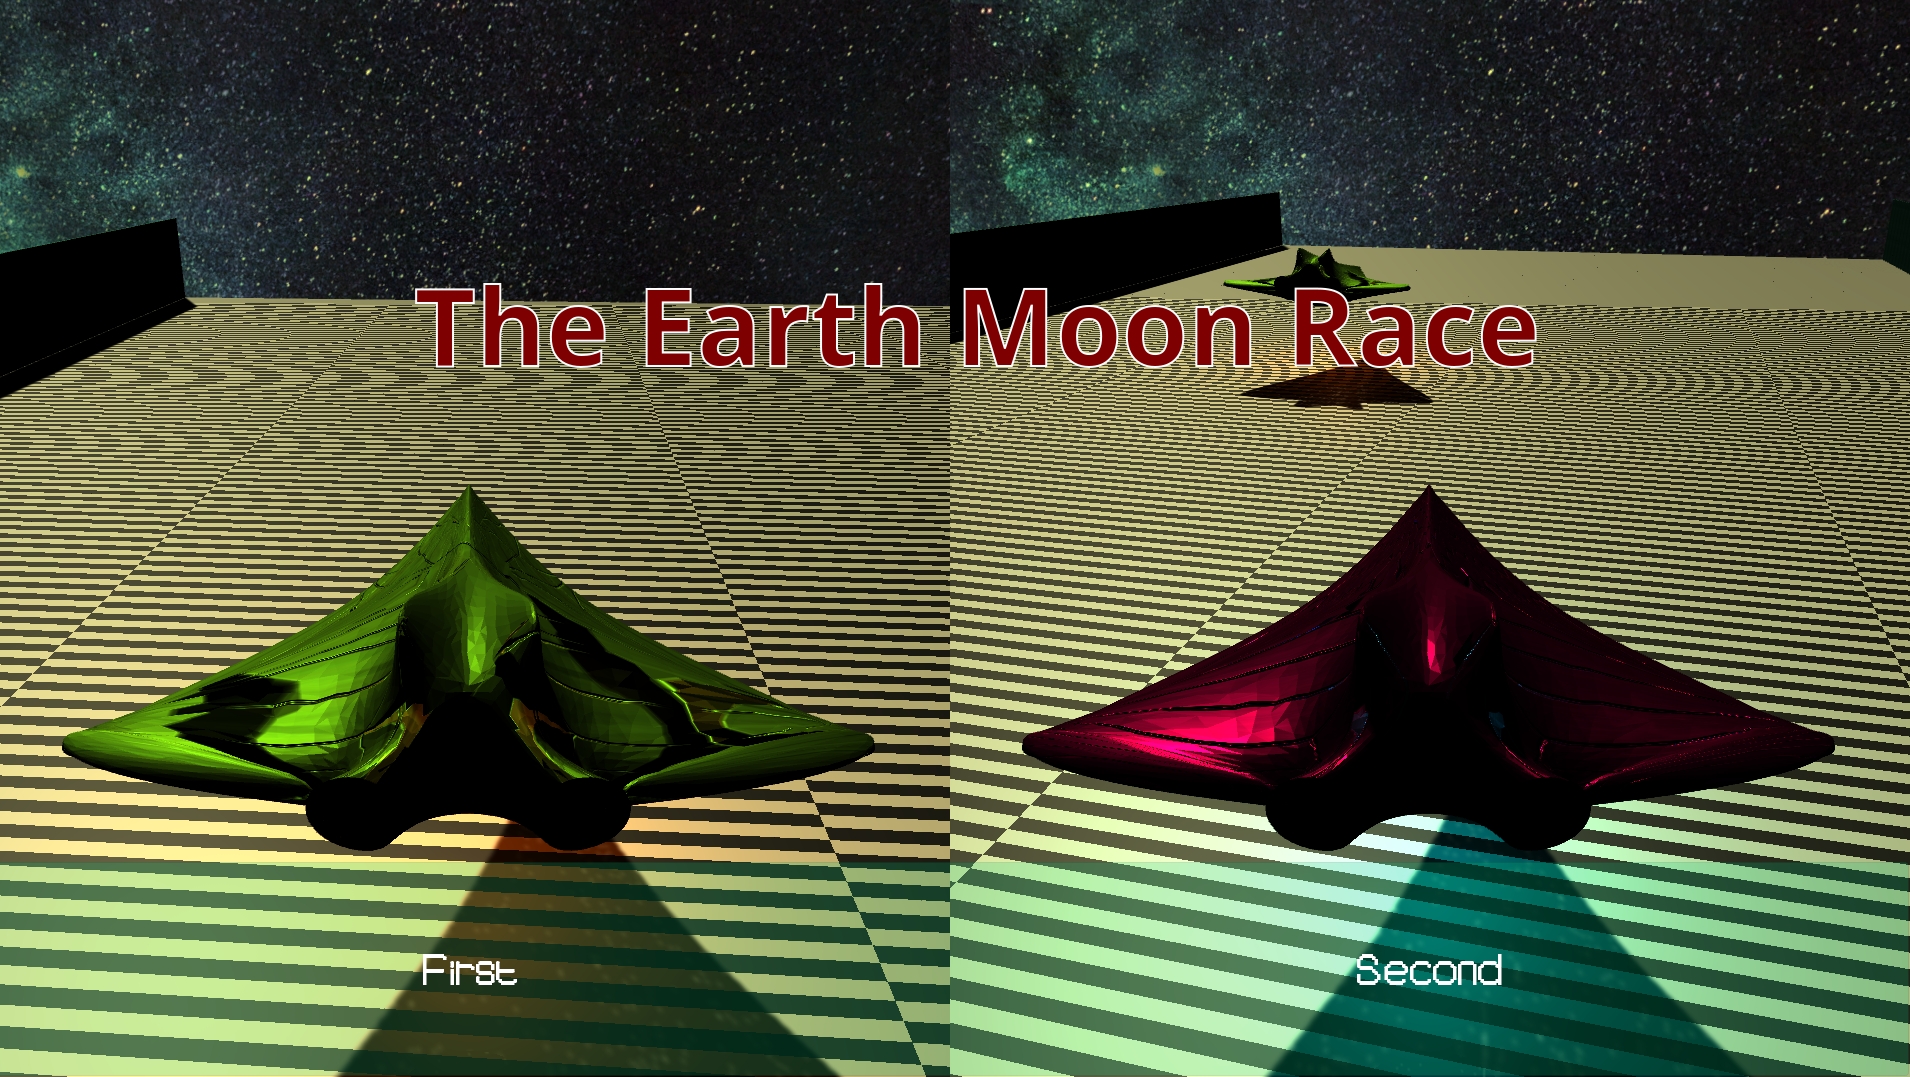 The Earth Moon Race